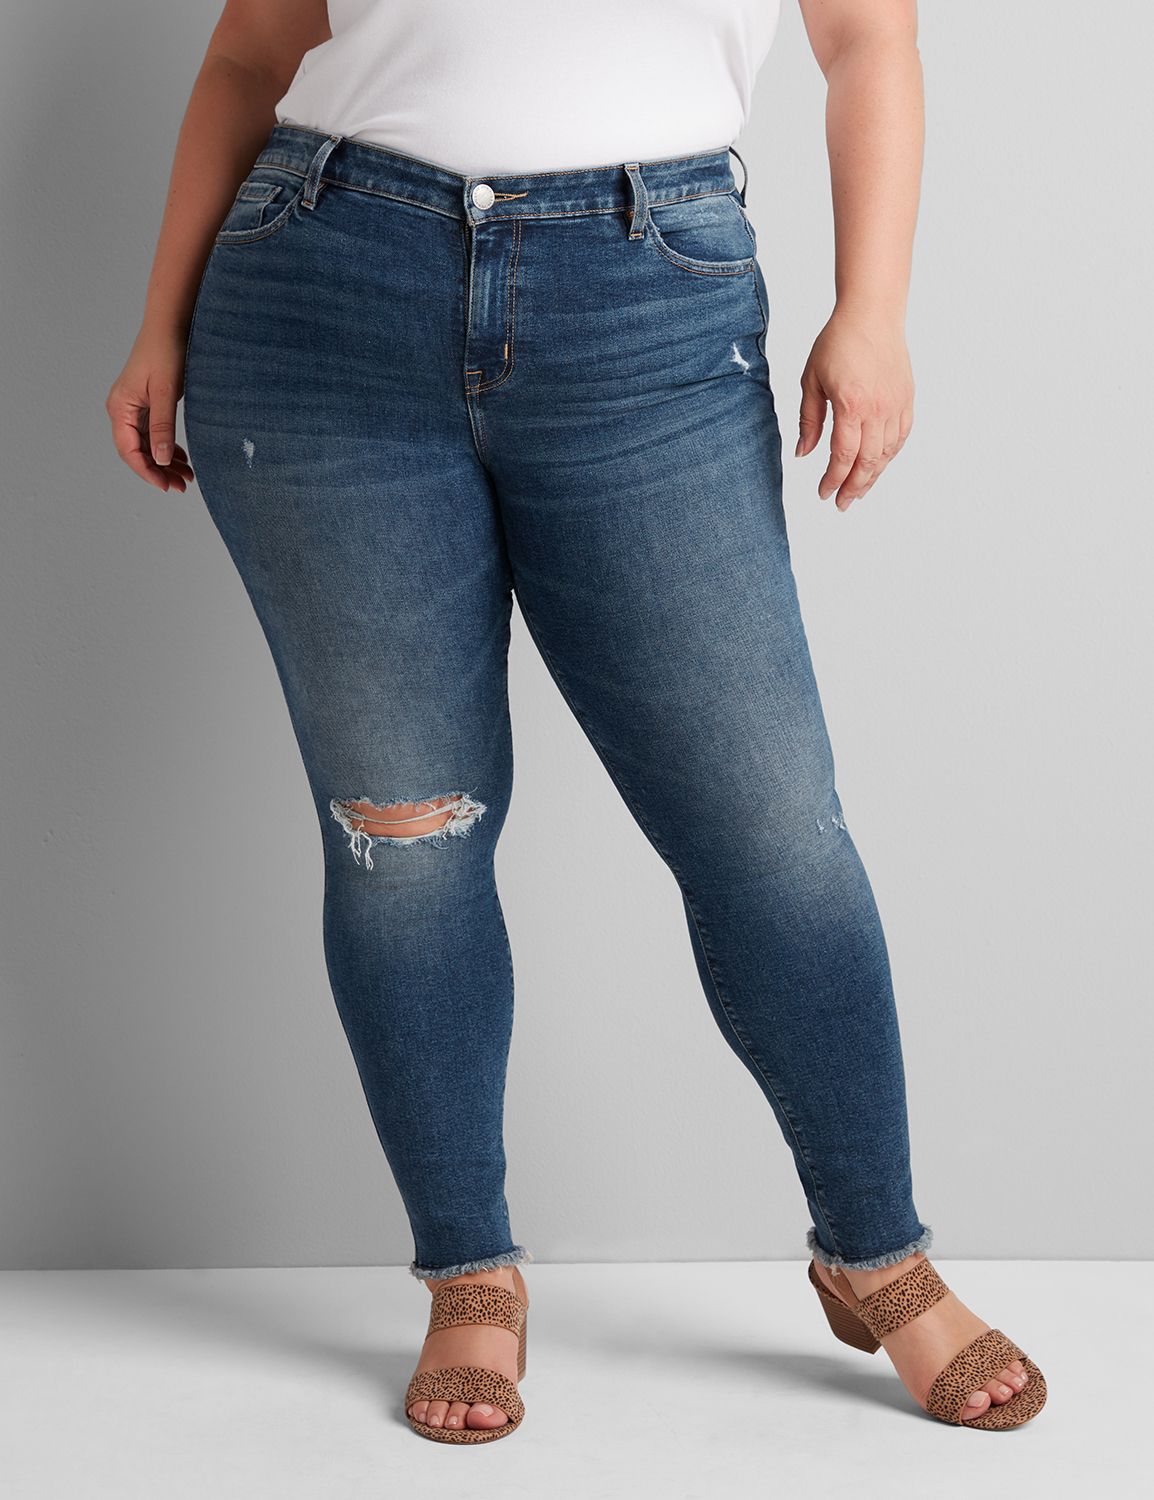 size 22 long jeans